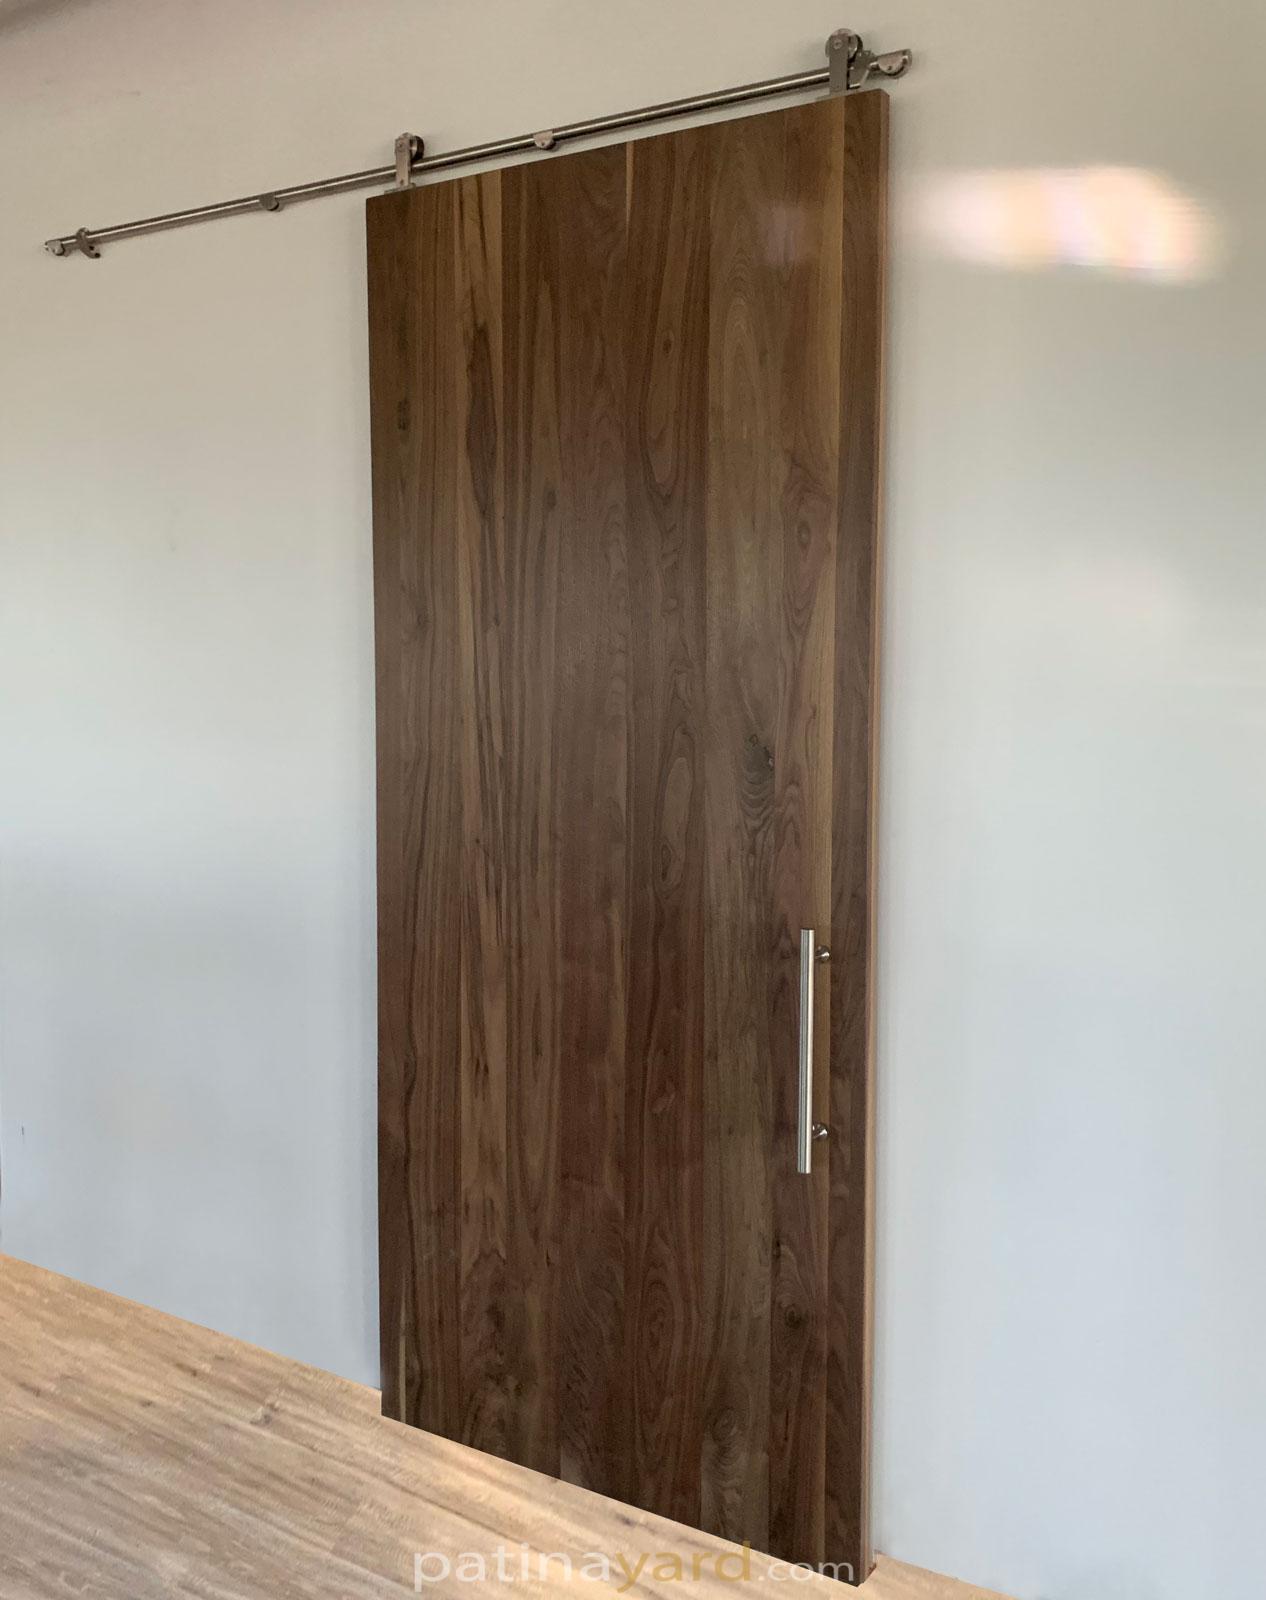 walnut barn door with stainless steel hardware